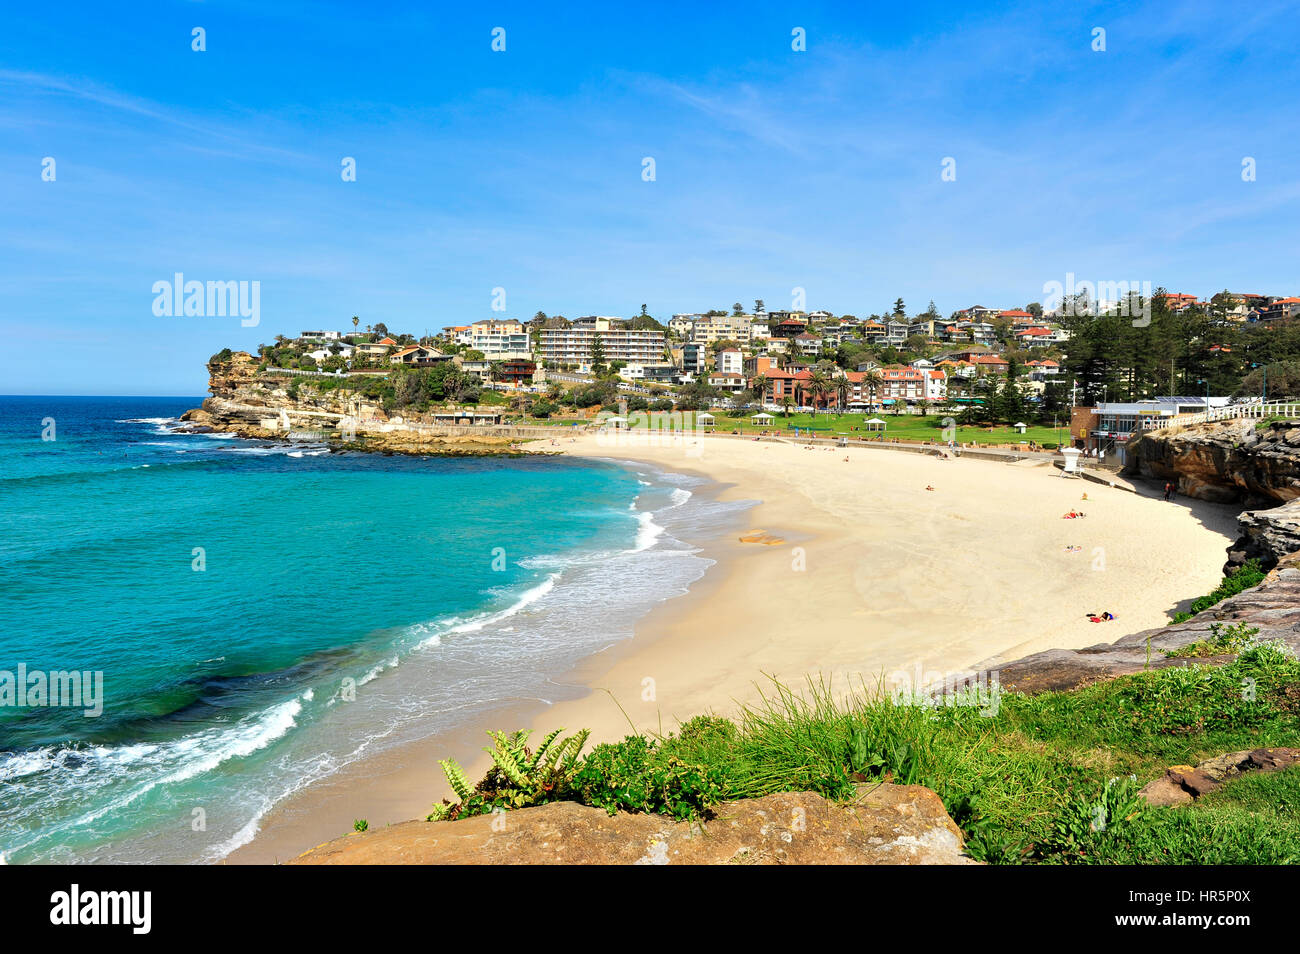 Sydney, Australia - September 2, 2013: Bronte beach in Sydney, Australia. Stock Photo